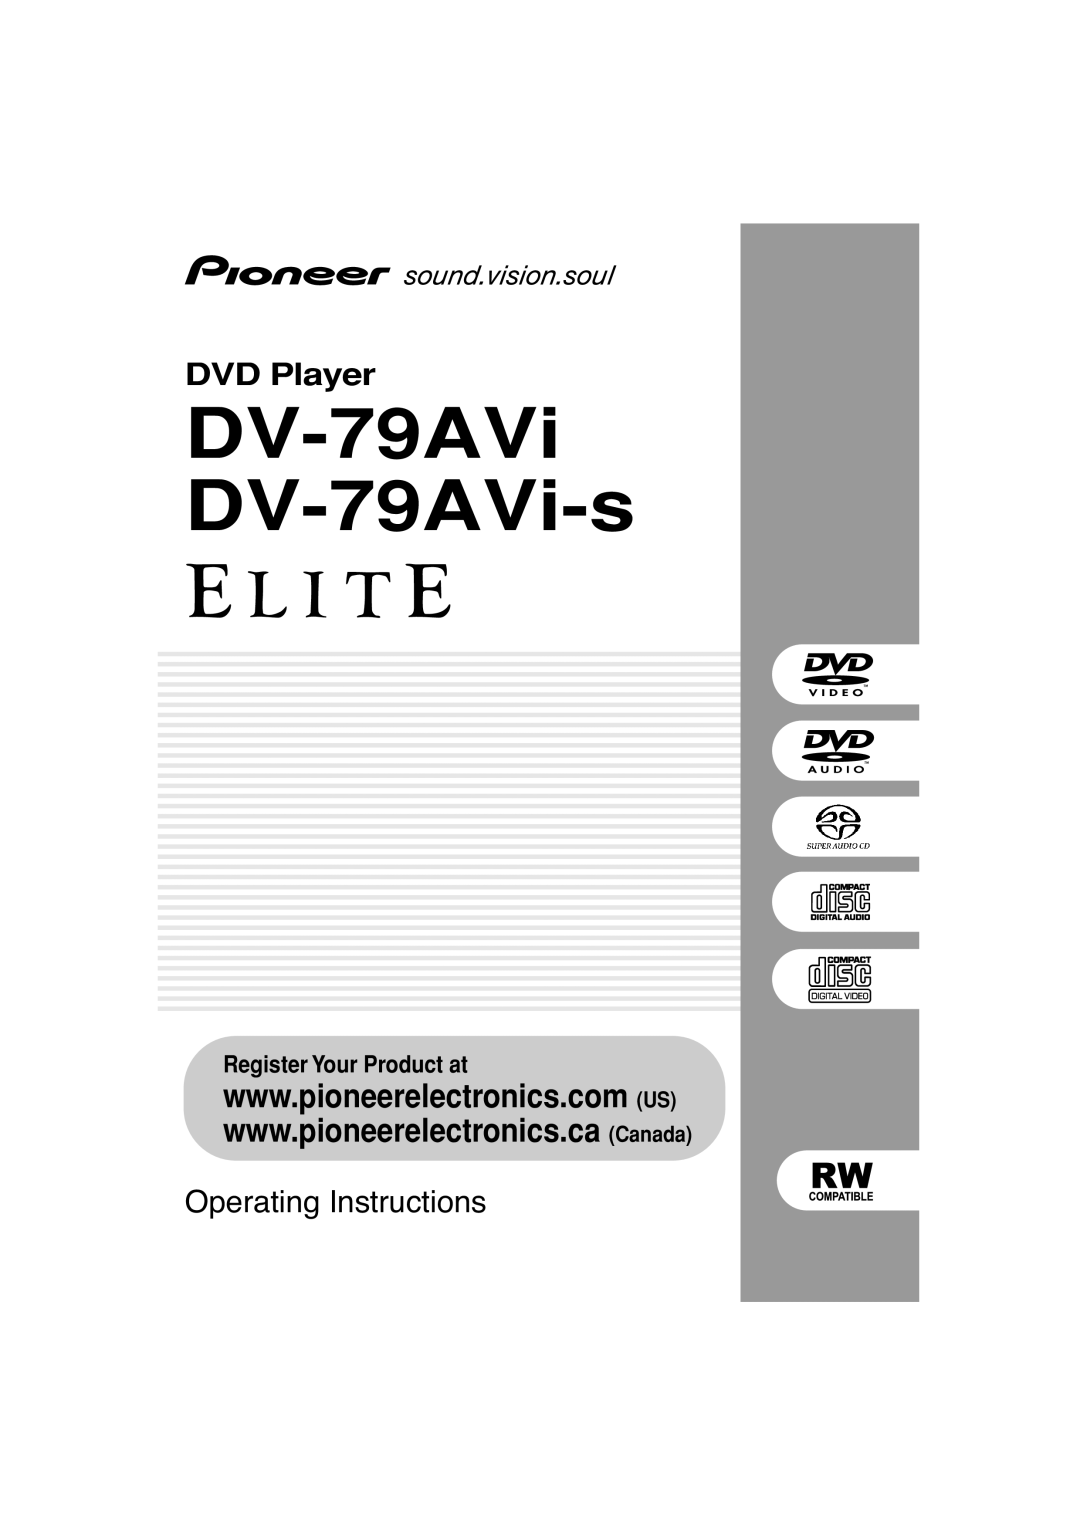 Pioneer operating instructions DV-79AVi DV-79AVi-s, DVD Player, Operating Instructions, Register Your Product at 